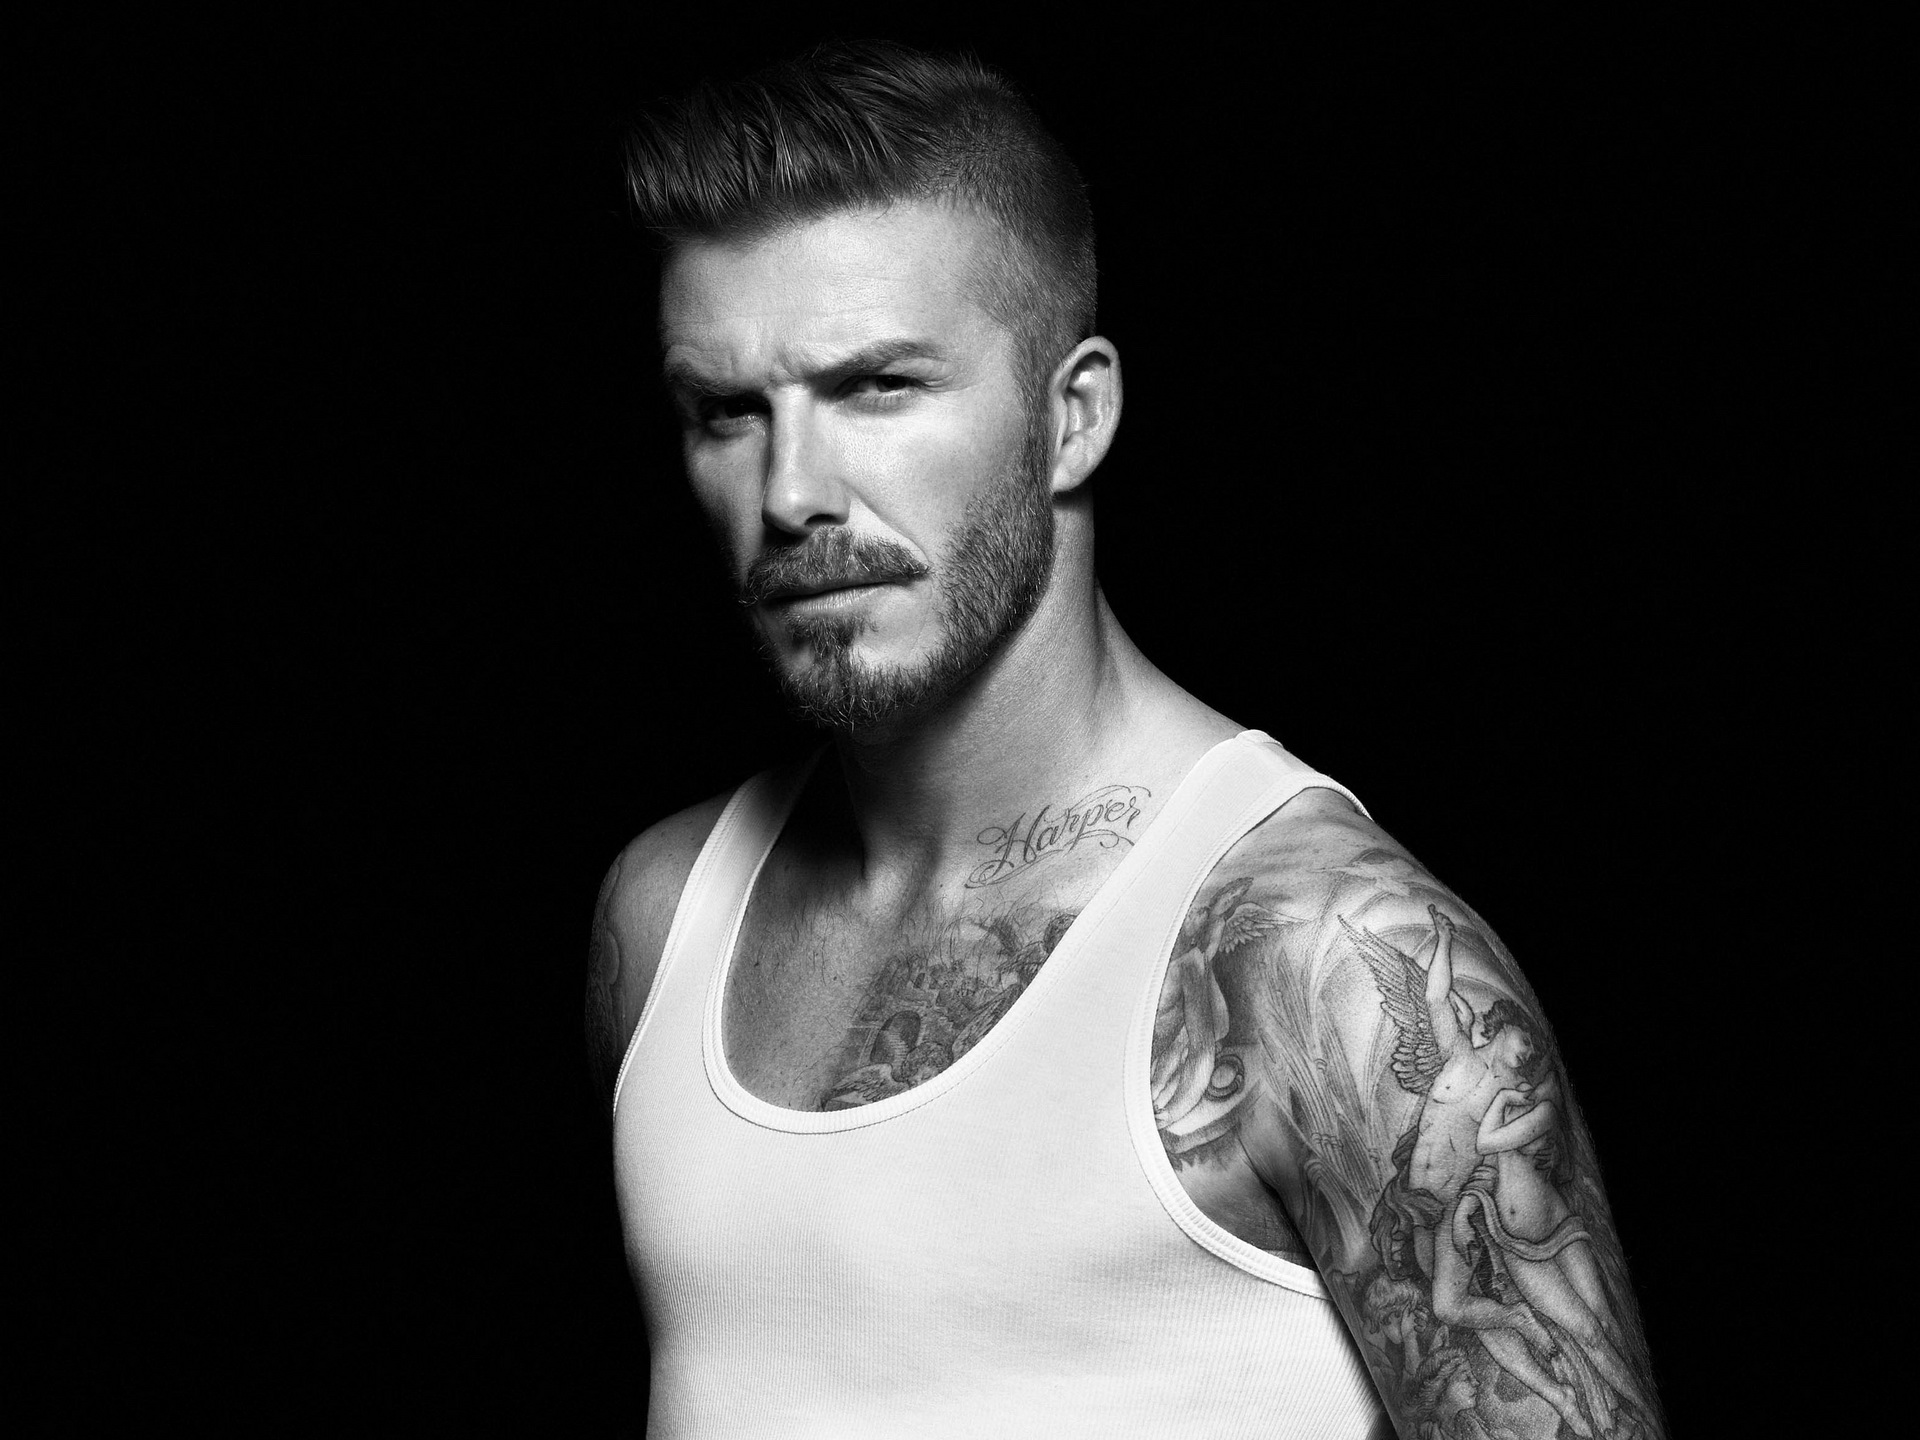 David-Beckham-Wallpaper-Handsome-2013.jpg